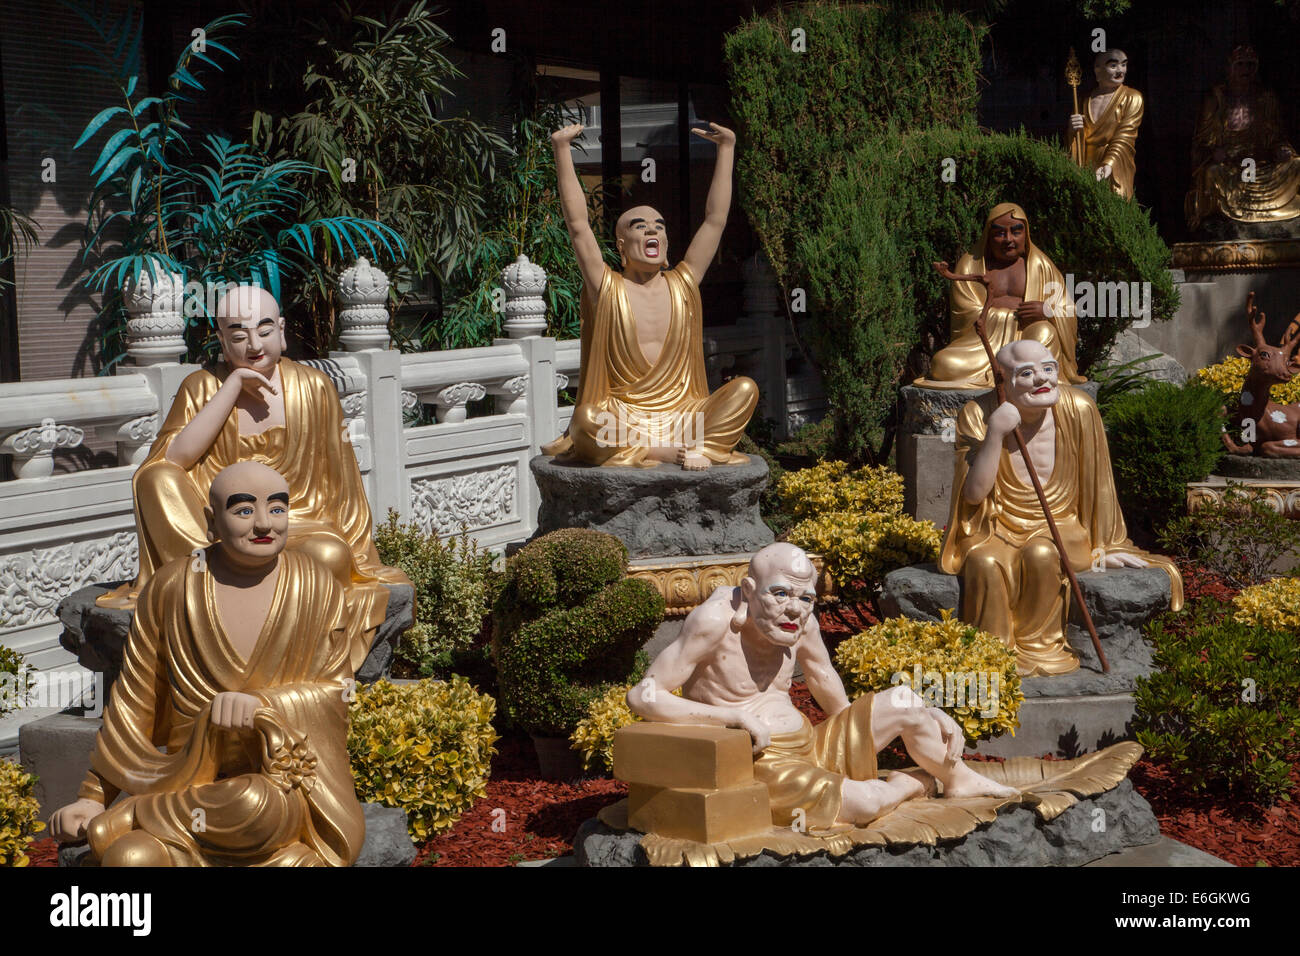 L'Arhat Garden, Hsi Lai temple, disciples du Bouddha, Hacienda Heights, Californie, USA Banque D'Images